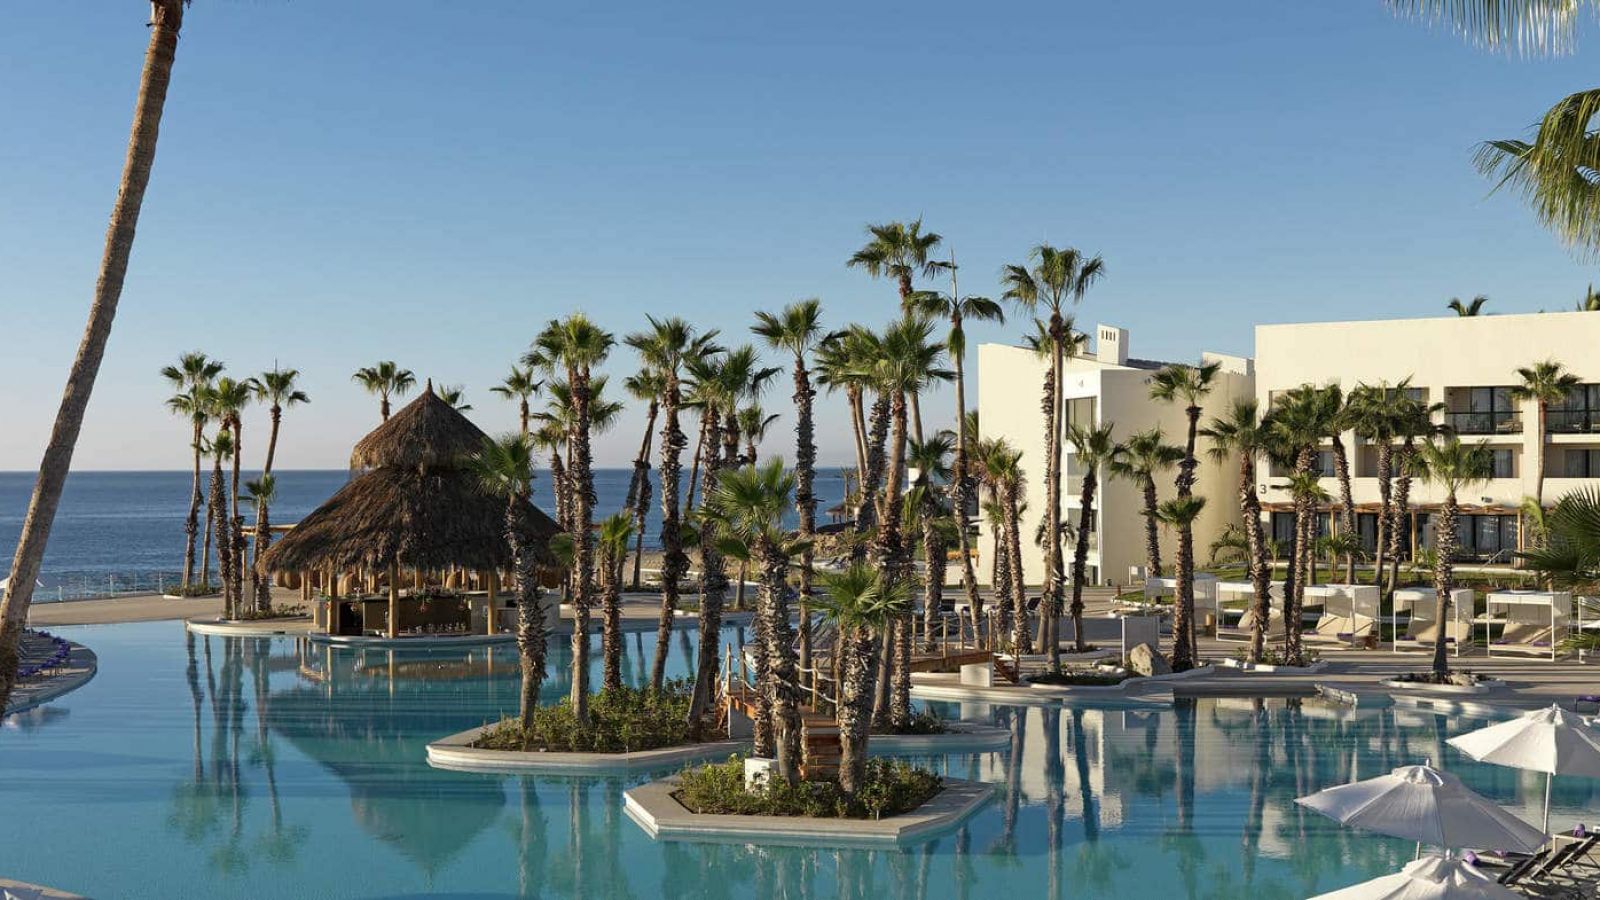 Paradisus Los Cabos is a luxury all inclusive resort